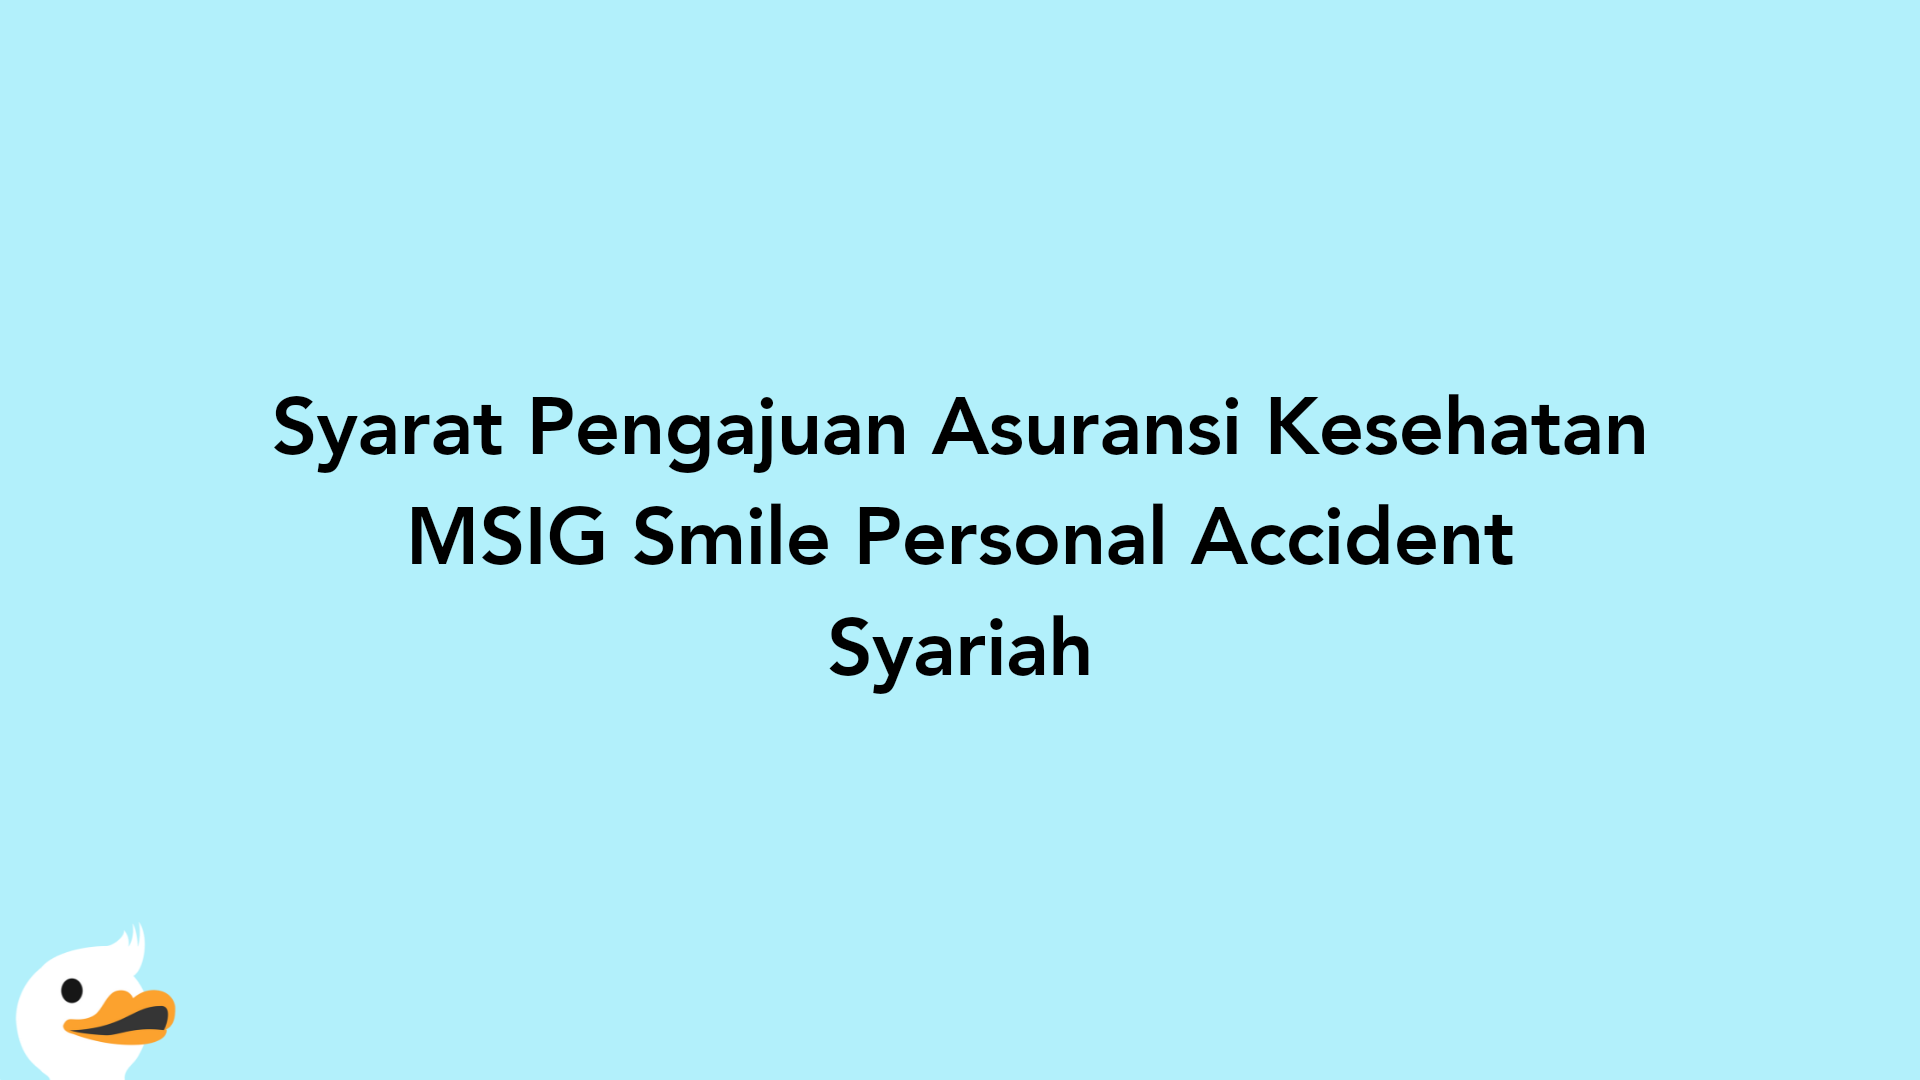 Syarat Pengajuan Asuransi Kesehatan MSIG Smile Personal Accident Syariah